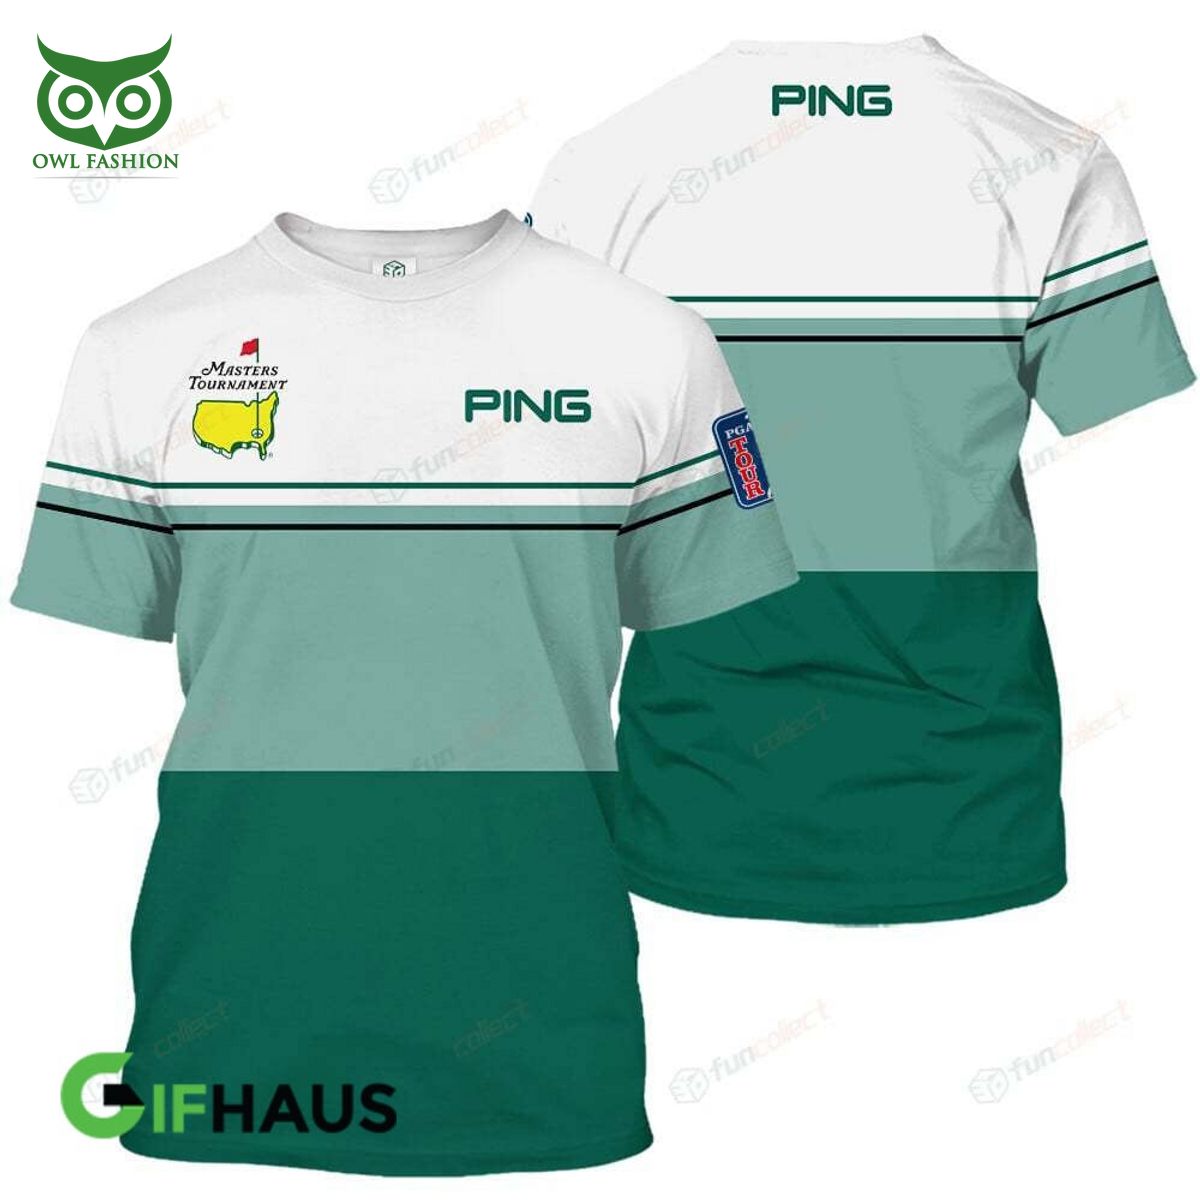 ping professional golf championsip 3d tshirt 1 lfegU